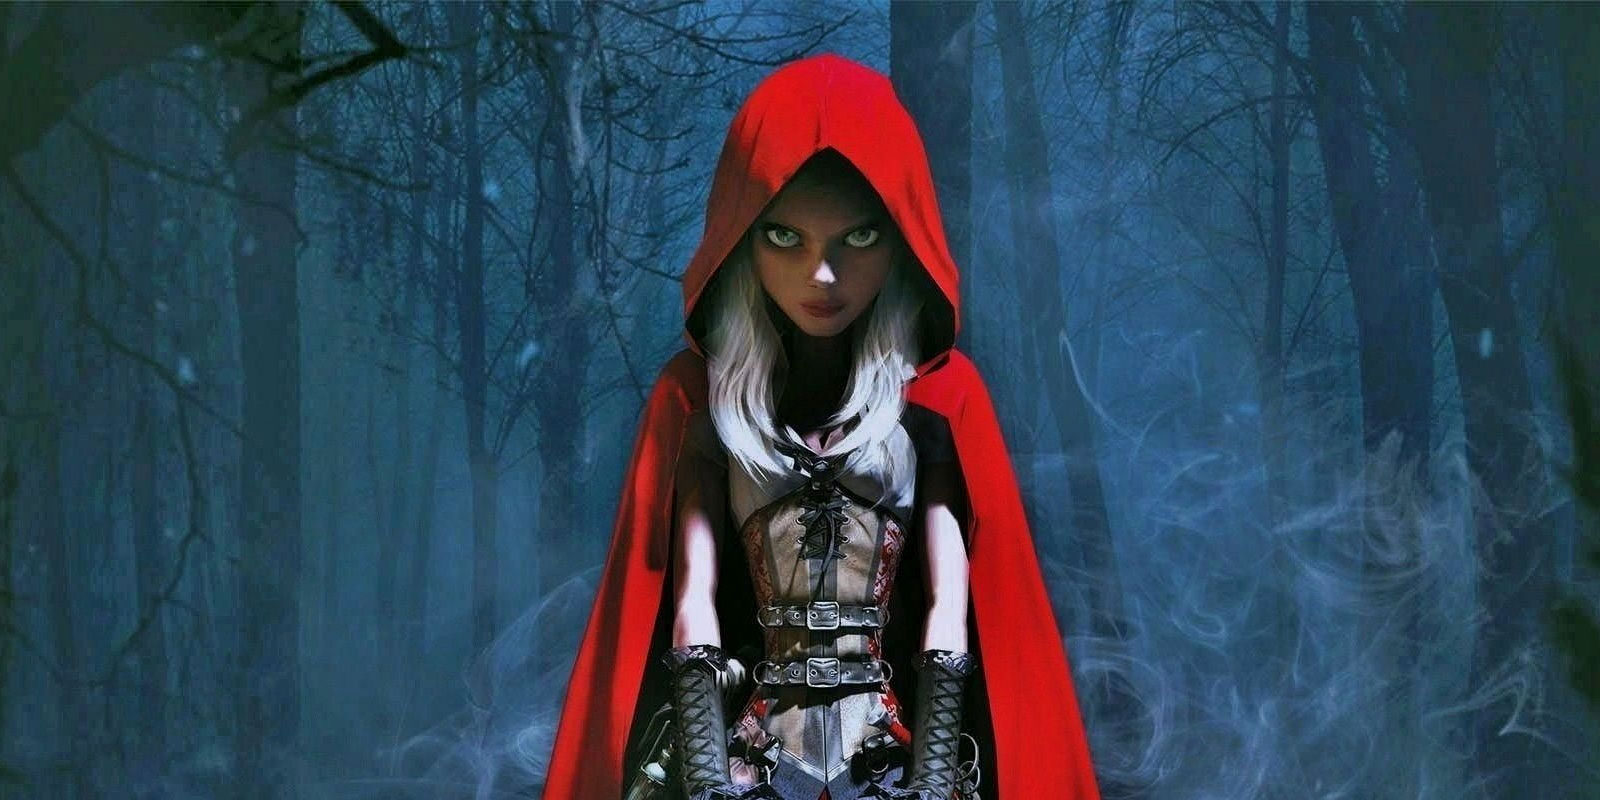 Witch cry 2 the red hood. Woolfe: the Red Hood Diaries. Woolfe - the Red Hood Diaries прохождение. РПГ про разбойника в Красном капюшоне. Монах-Инквизитор в Красном капюшоне.